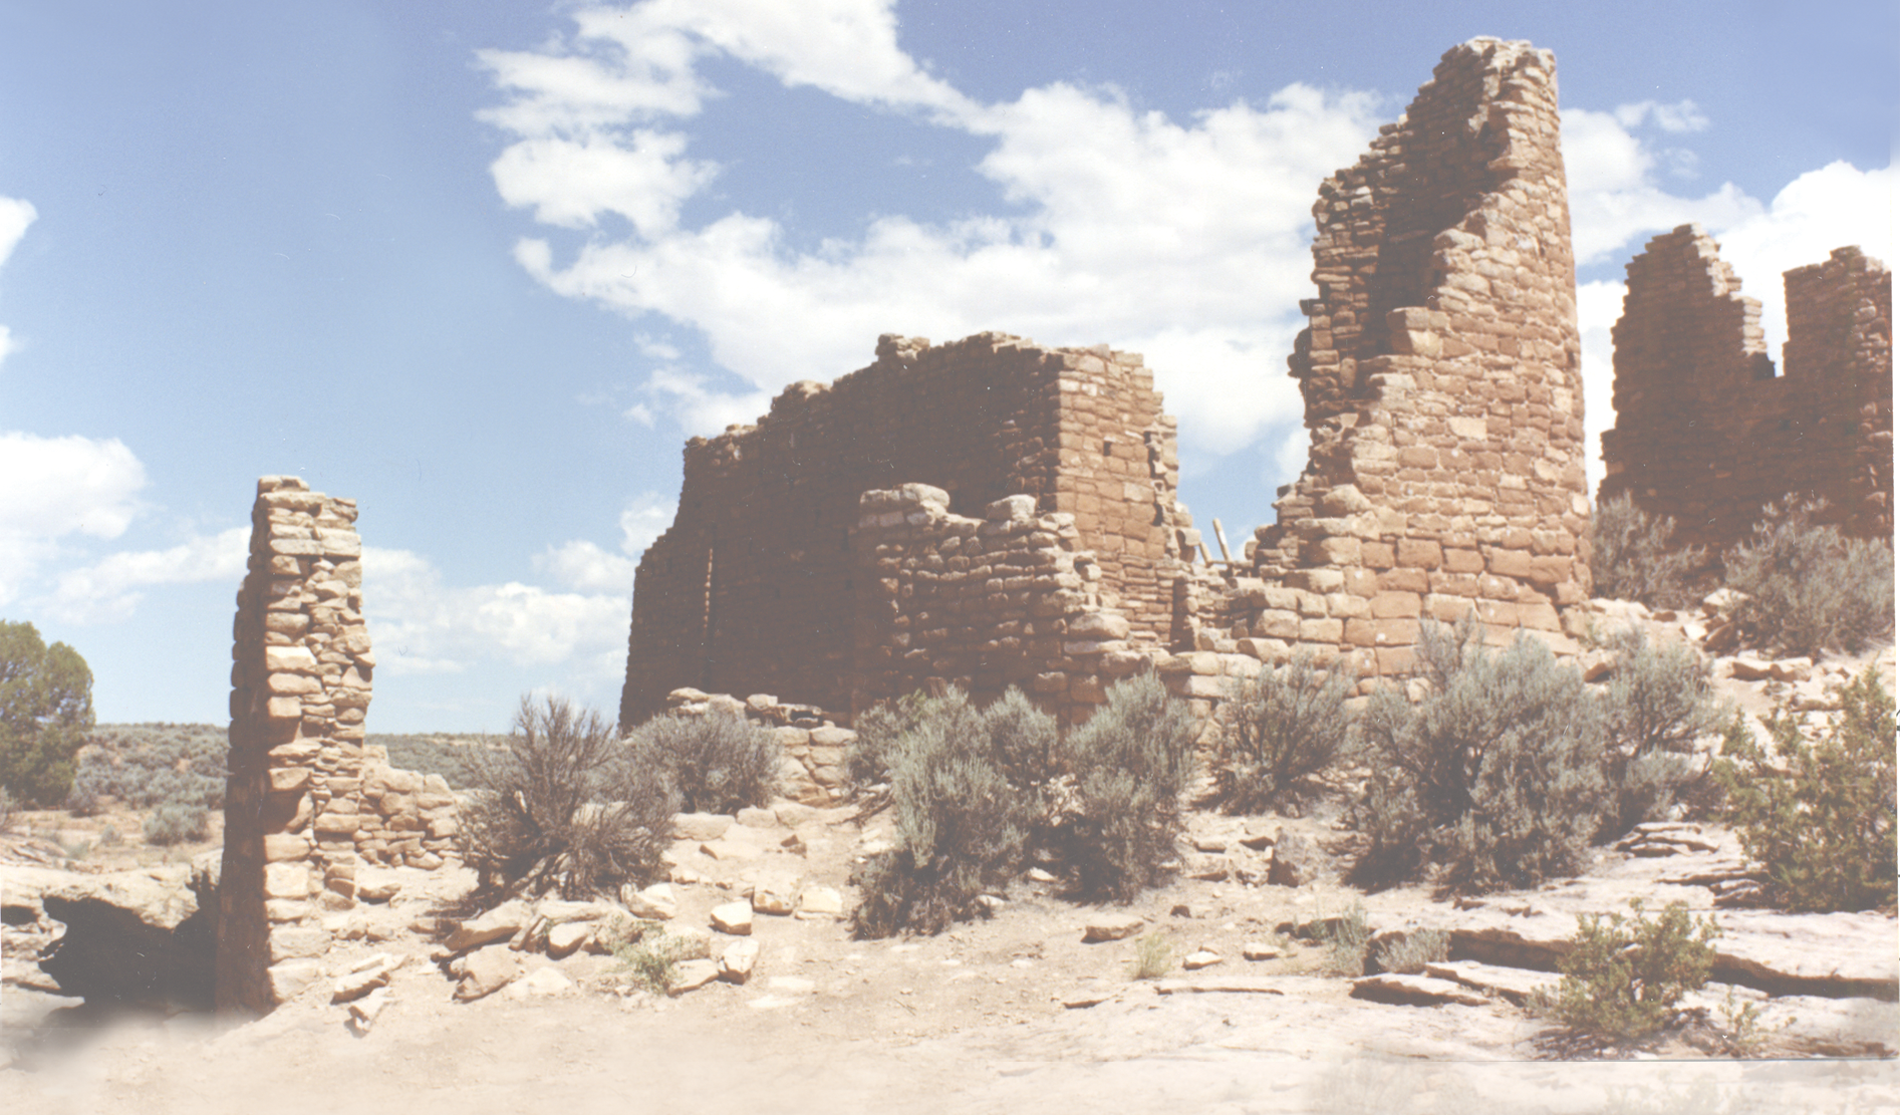 Indian Camp Ranch ruins